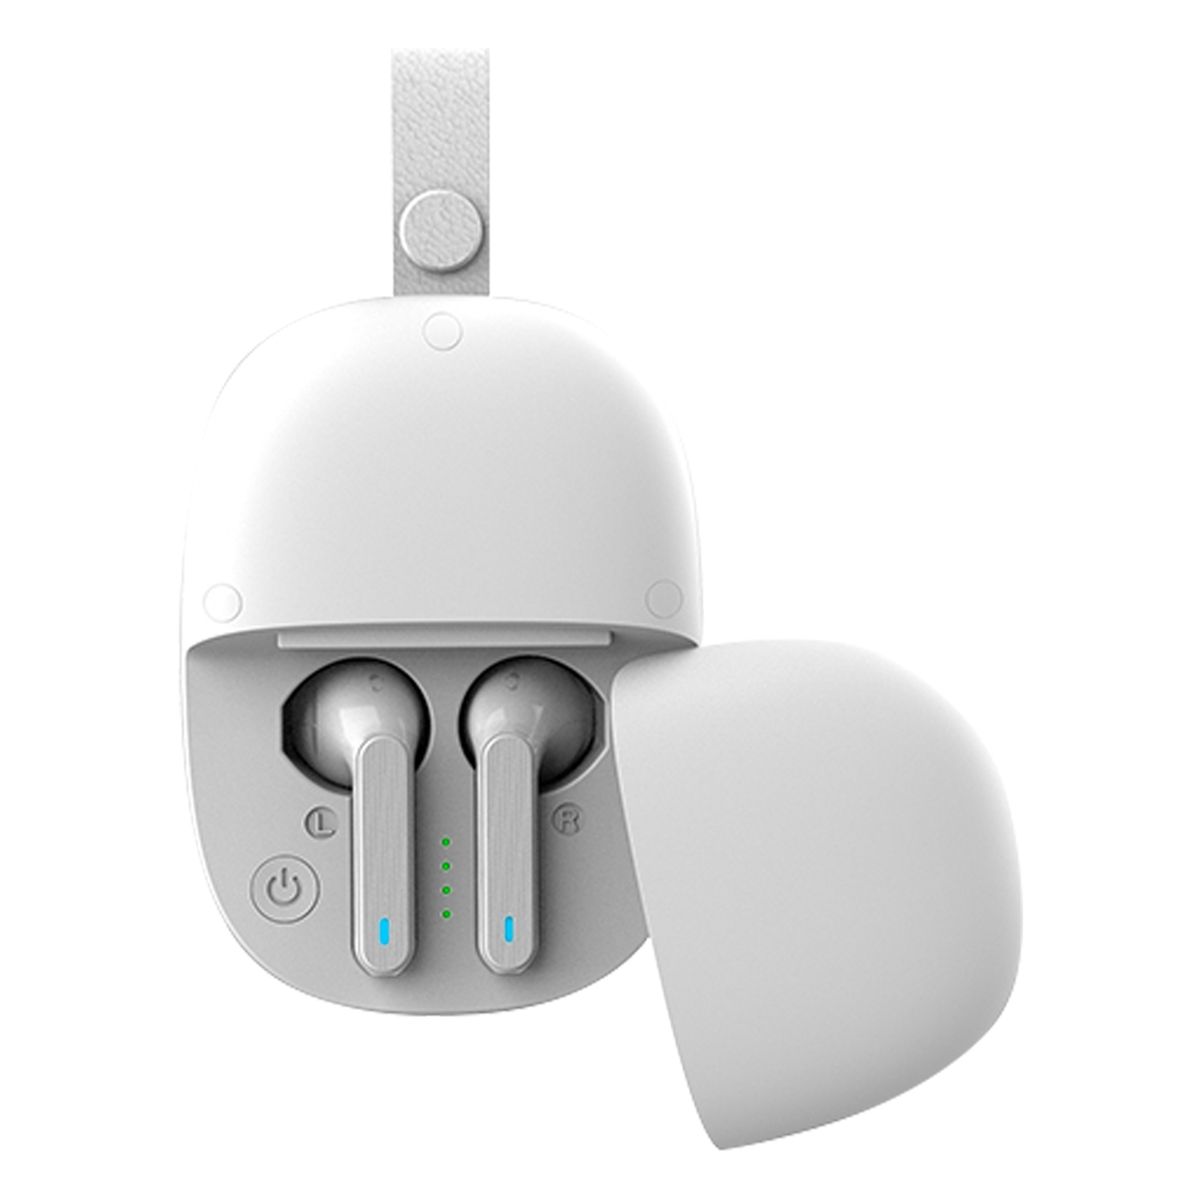 Photos - Headphones Zummy 2-in-1 Pocket-Sized Speaker with Wireless Earbuds by Zummy™ - White